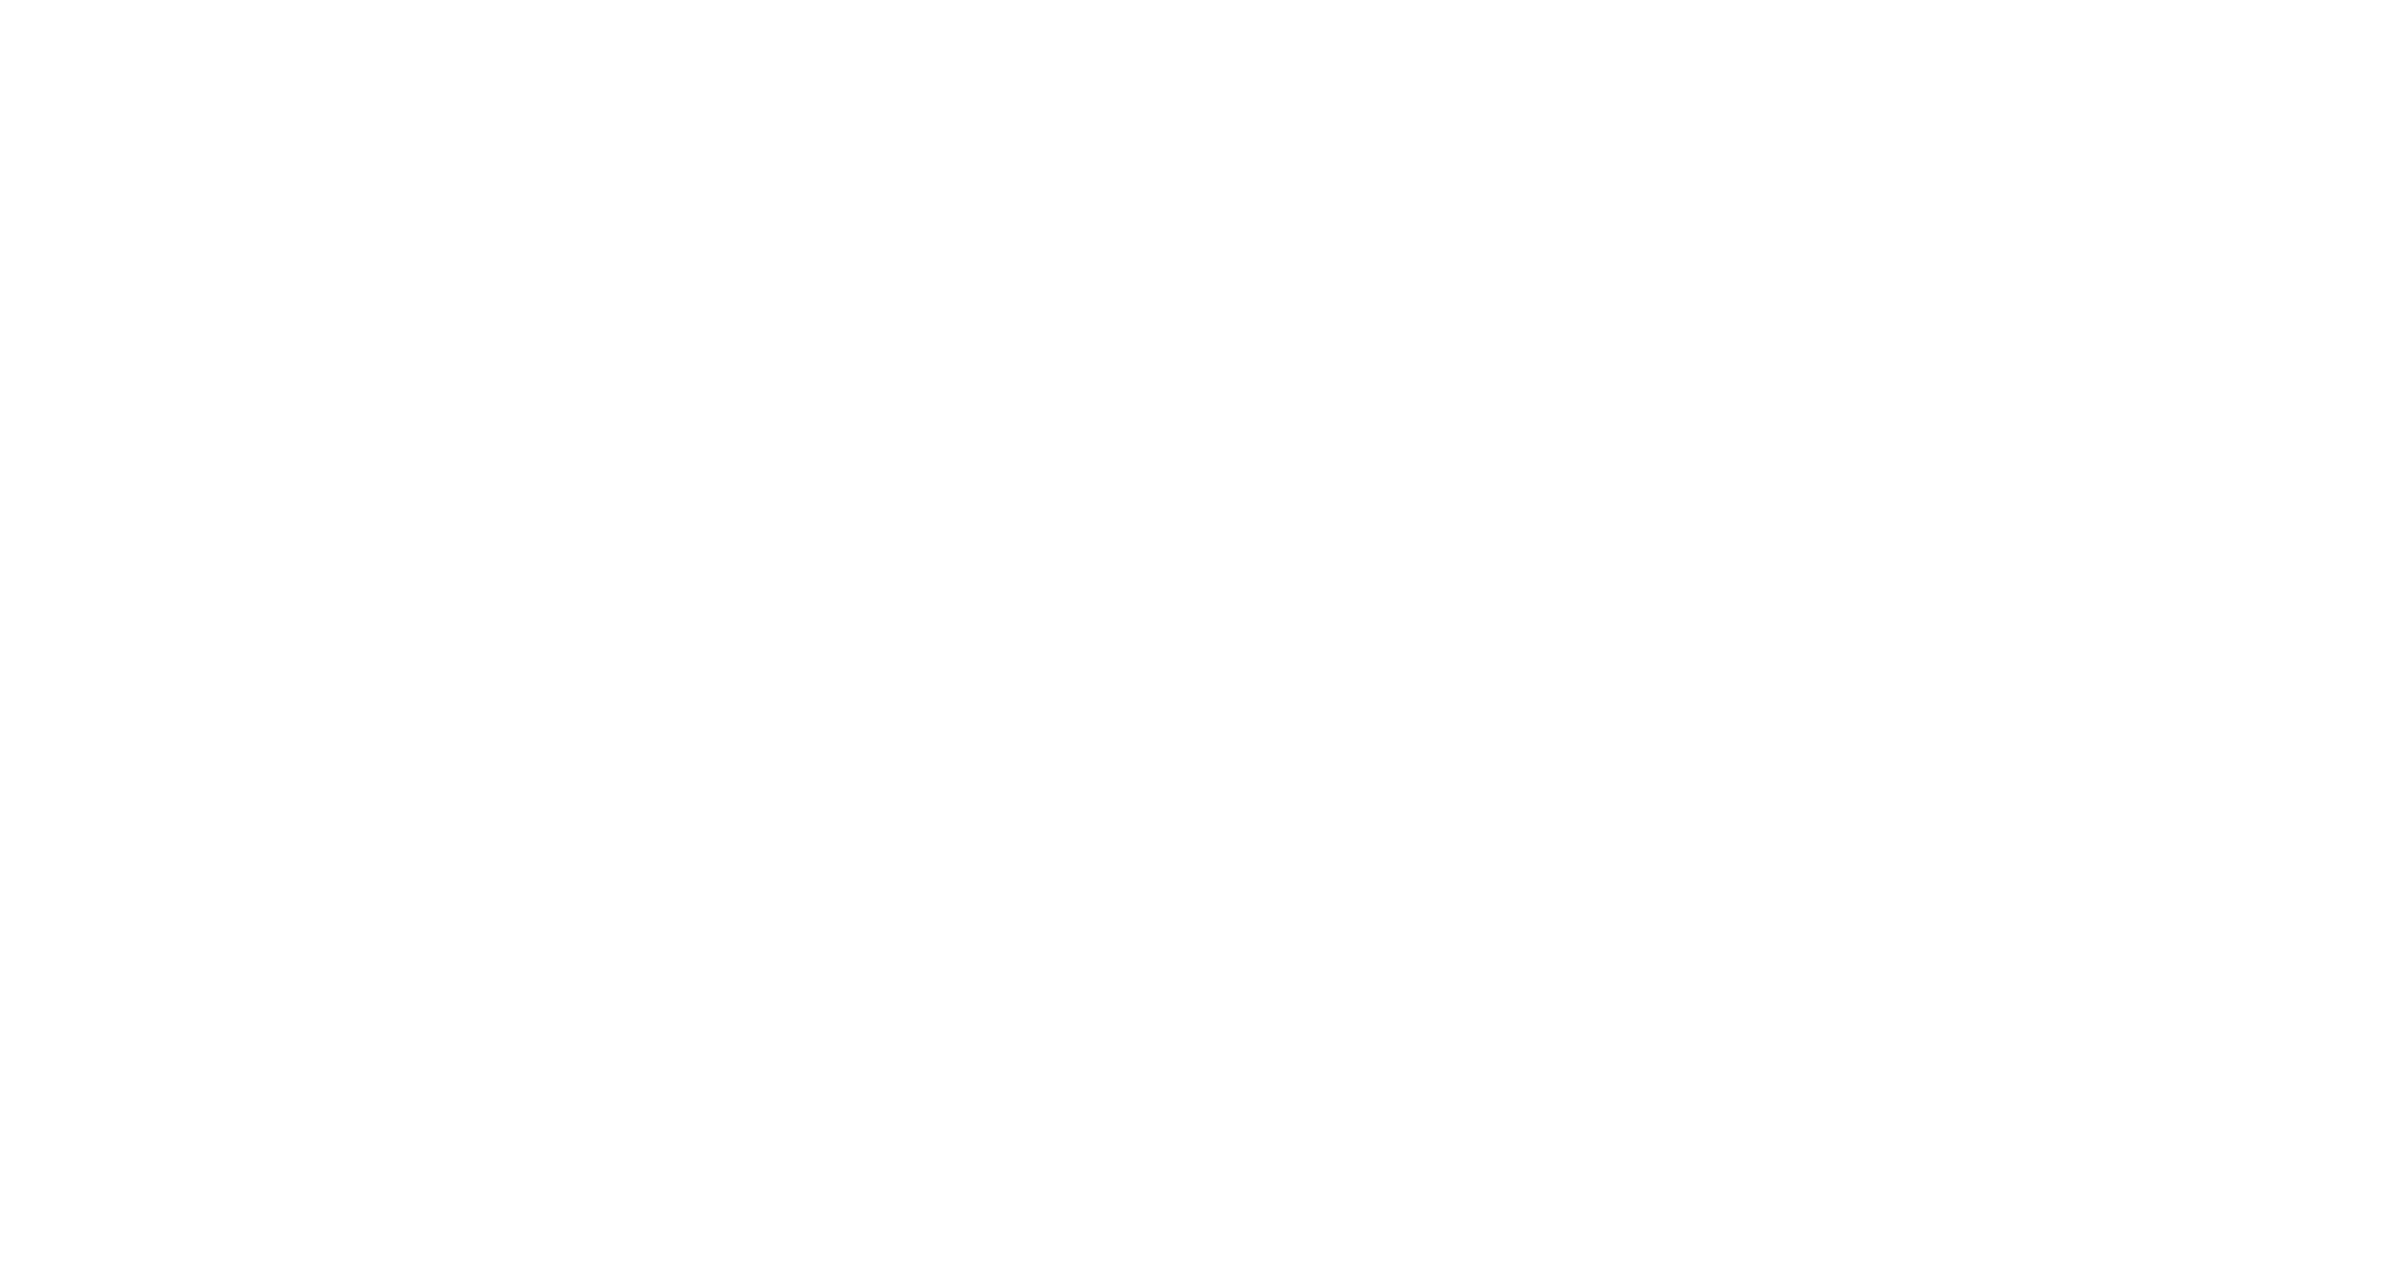 HIPERCOR